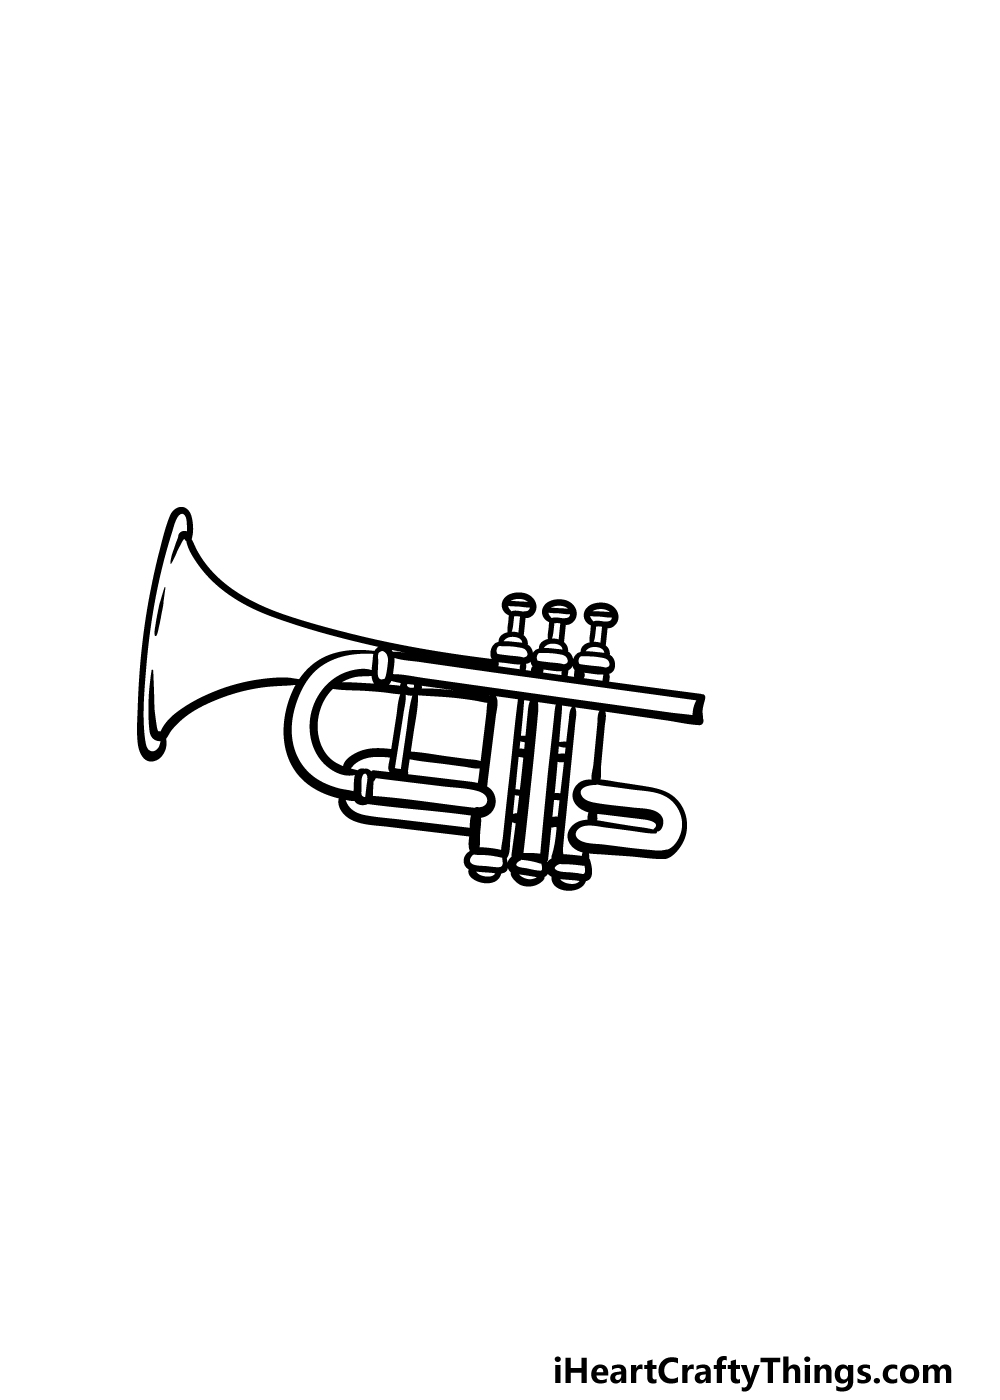 Detail Image Of A Trumpet Nomer 21